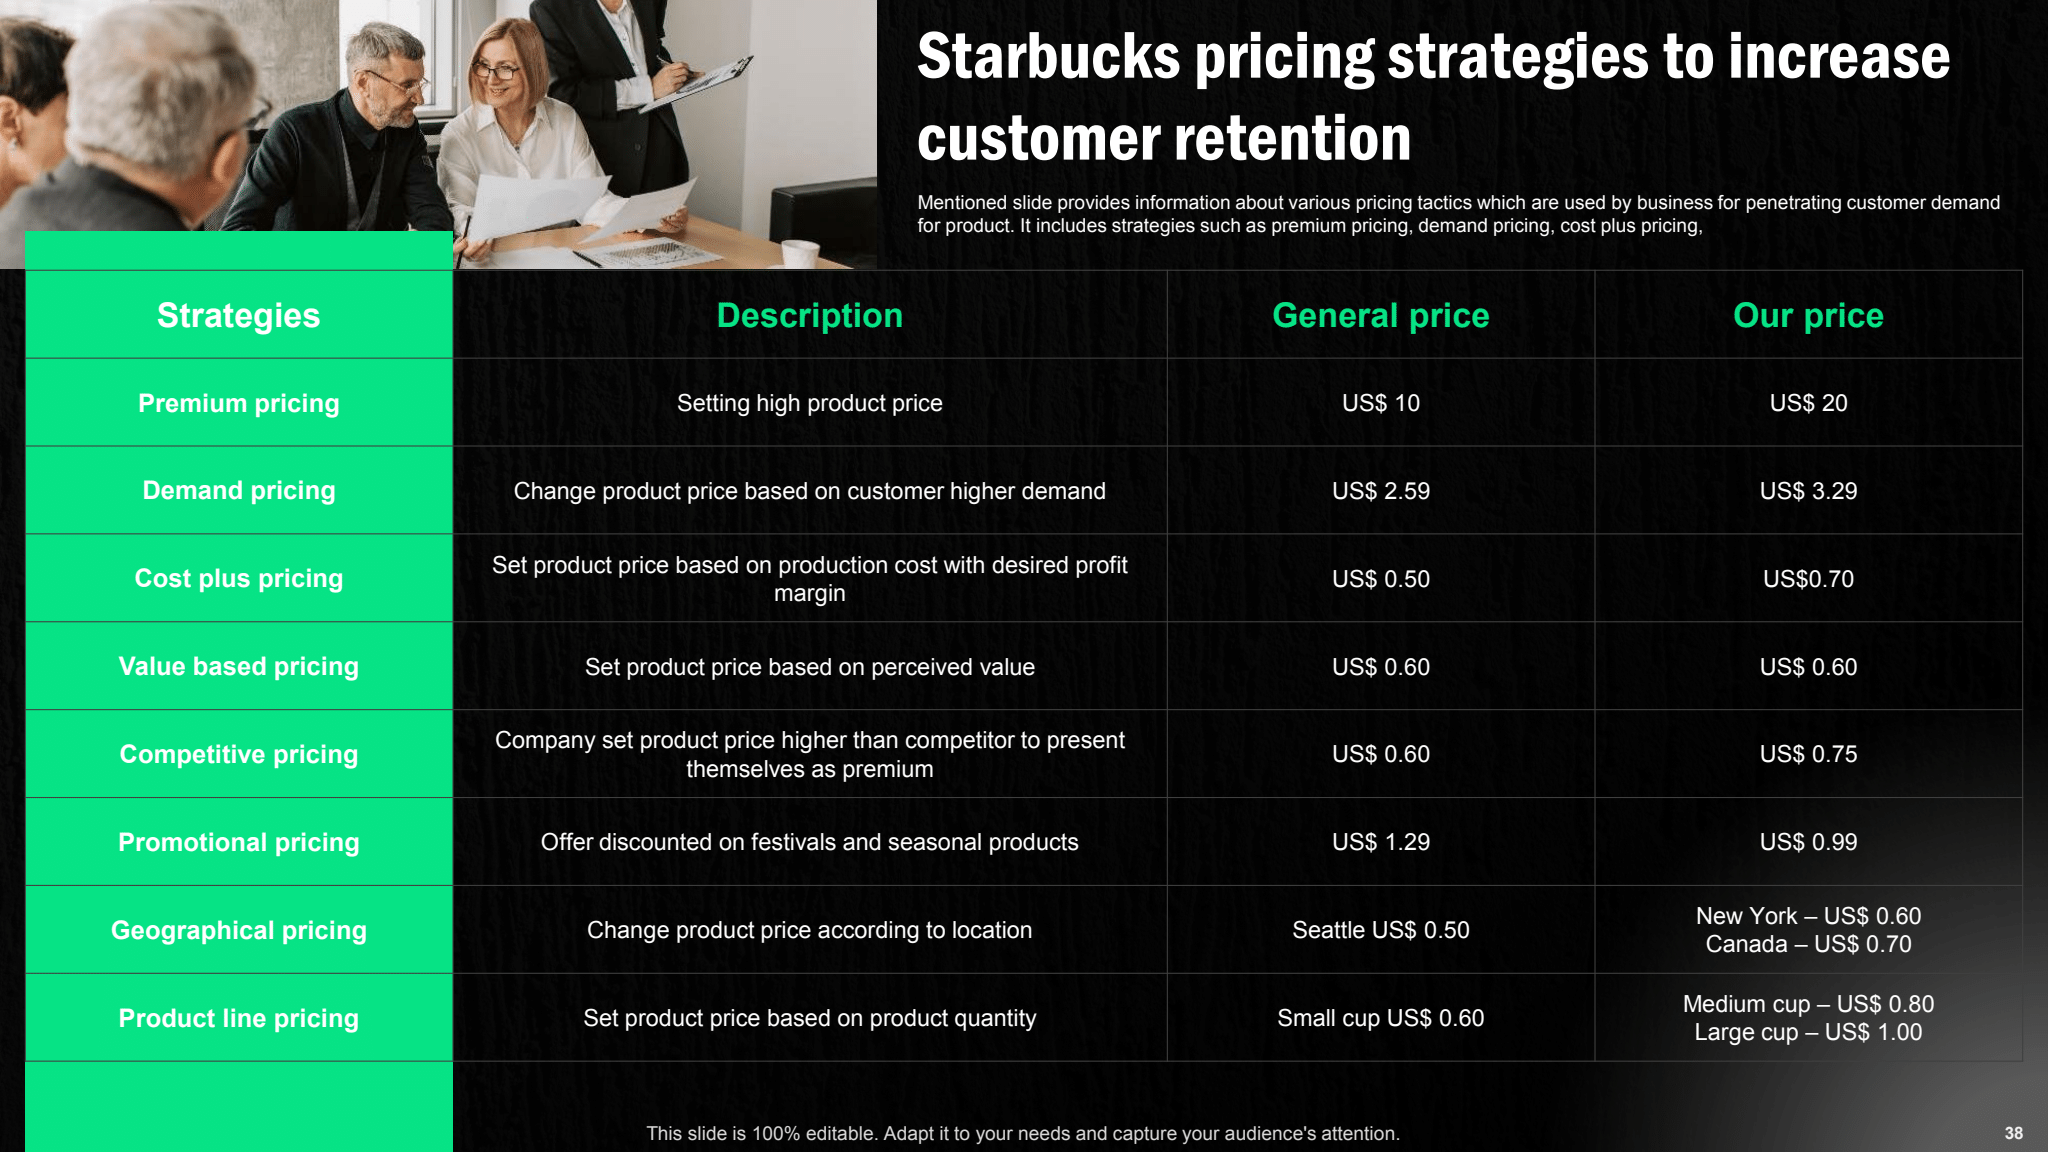 Starbucks Pricing Strategies to Increase Customer Retention